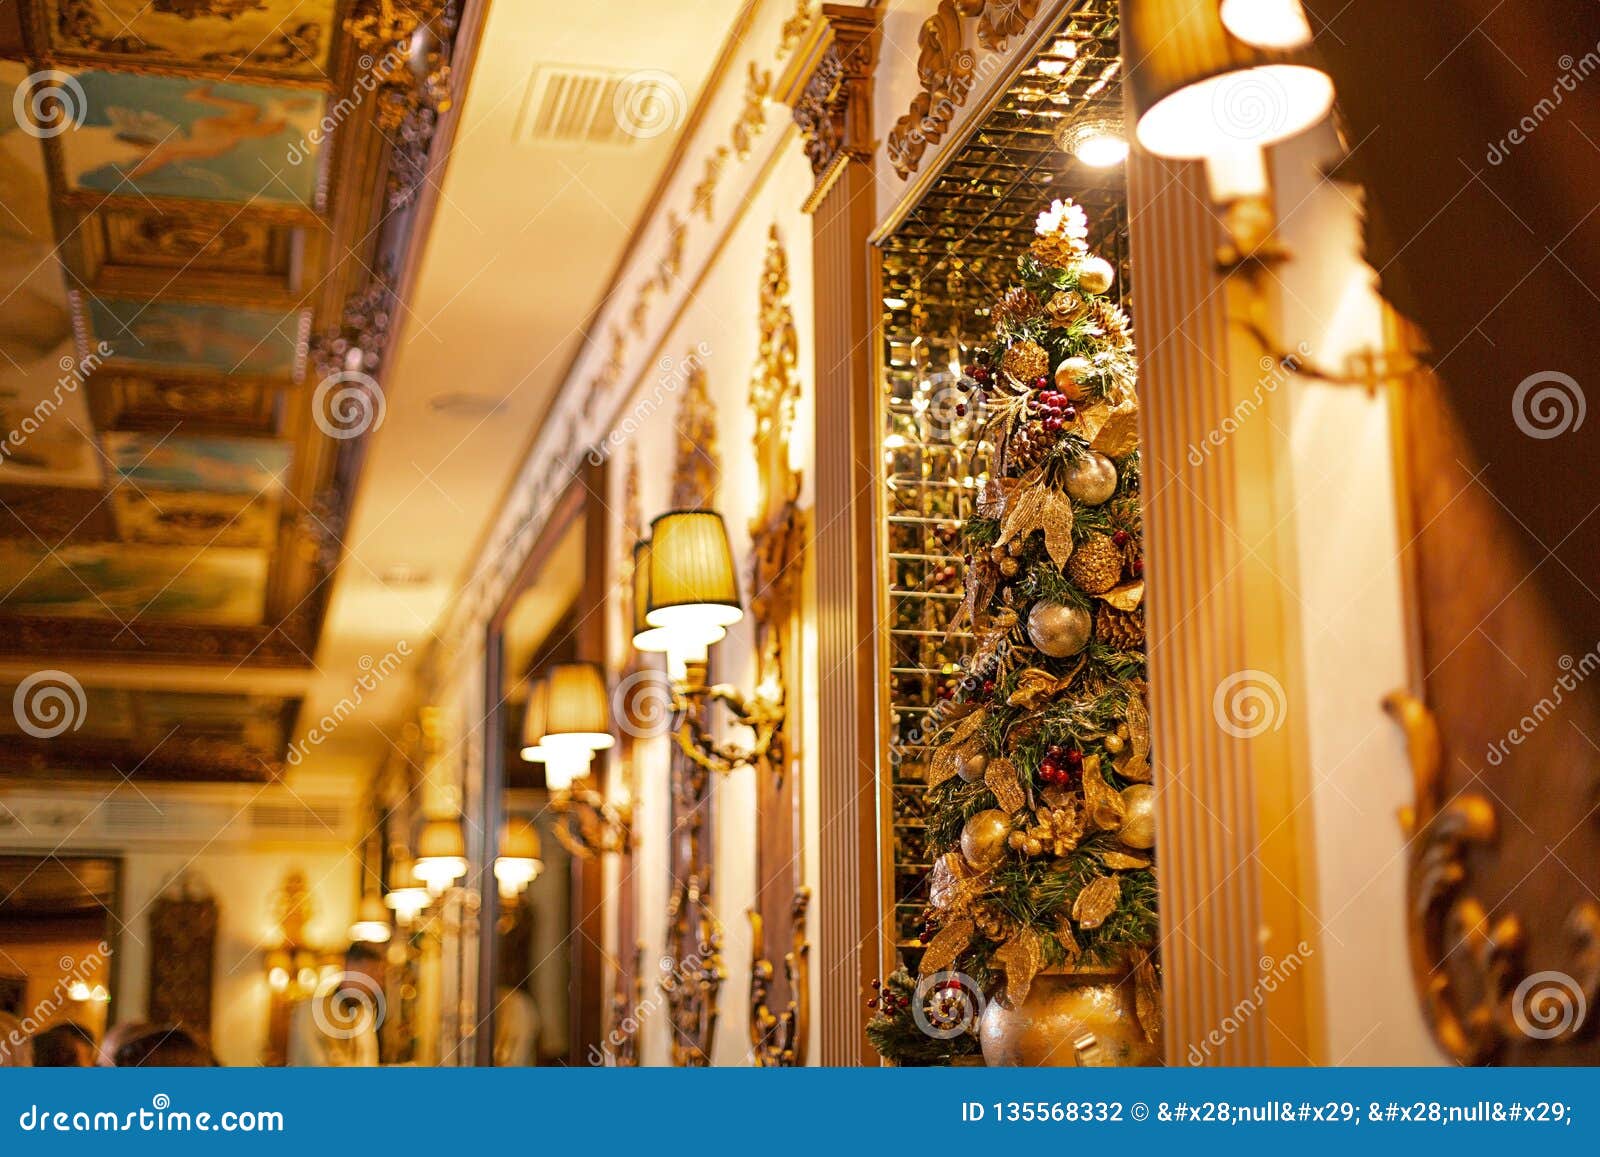 Cozy Restaurant Interior In Golden Color Stock Photo Image